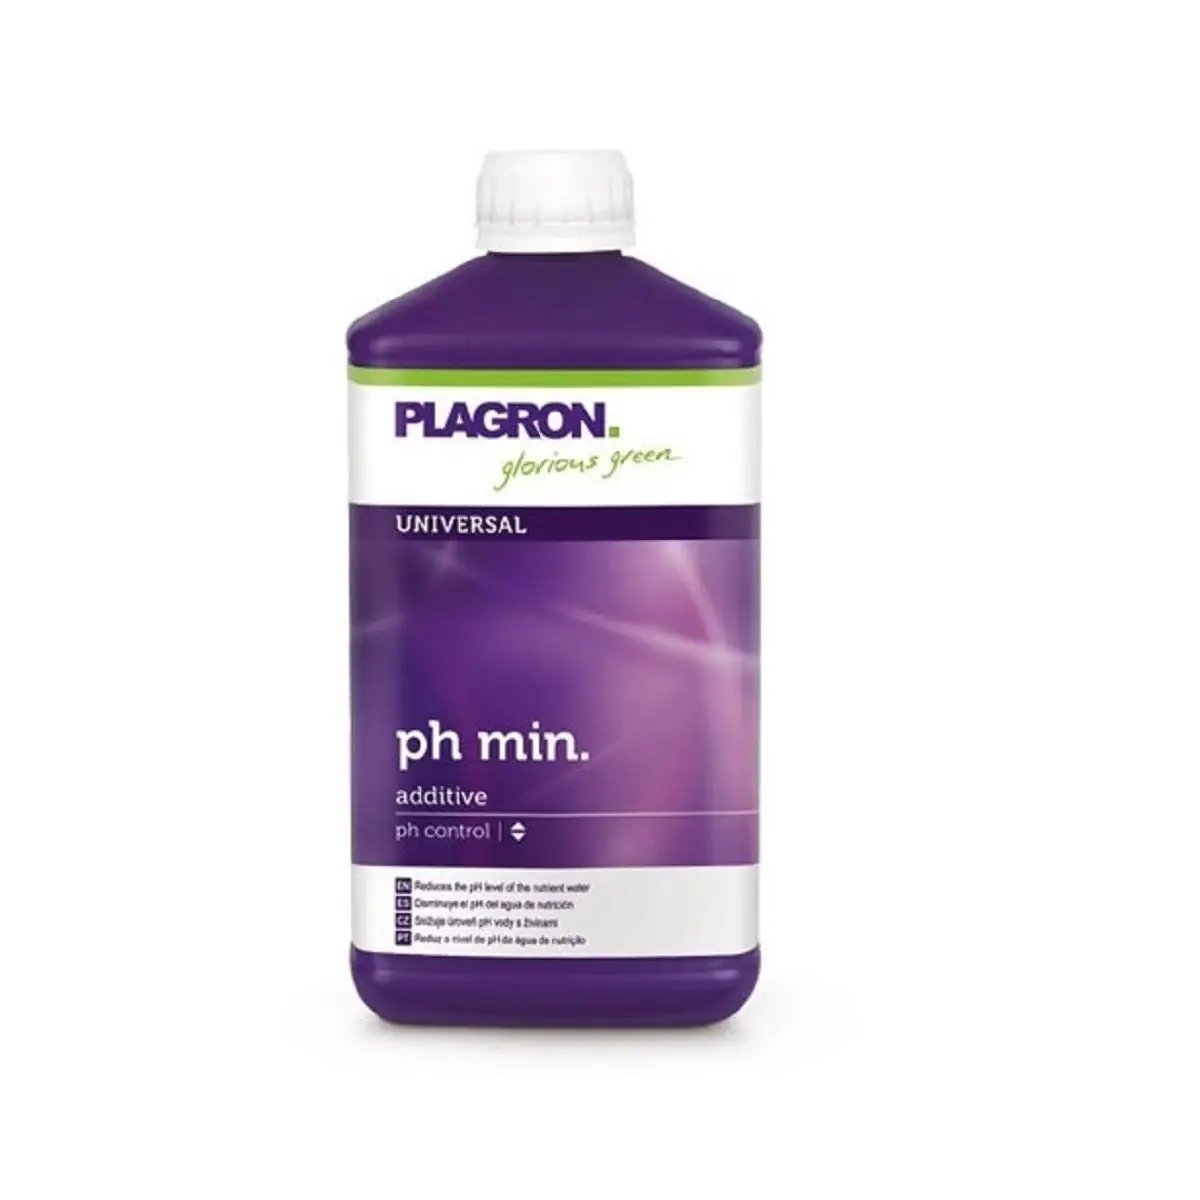 Plagron PH Min 500ml